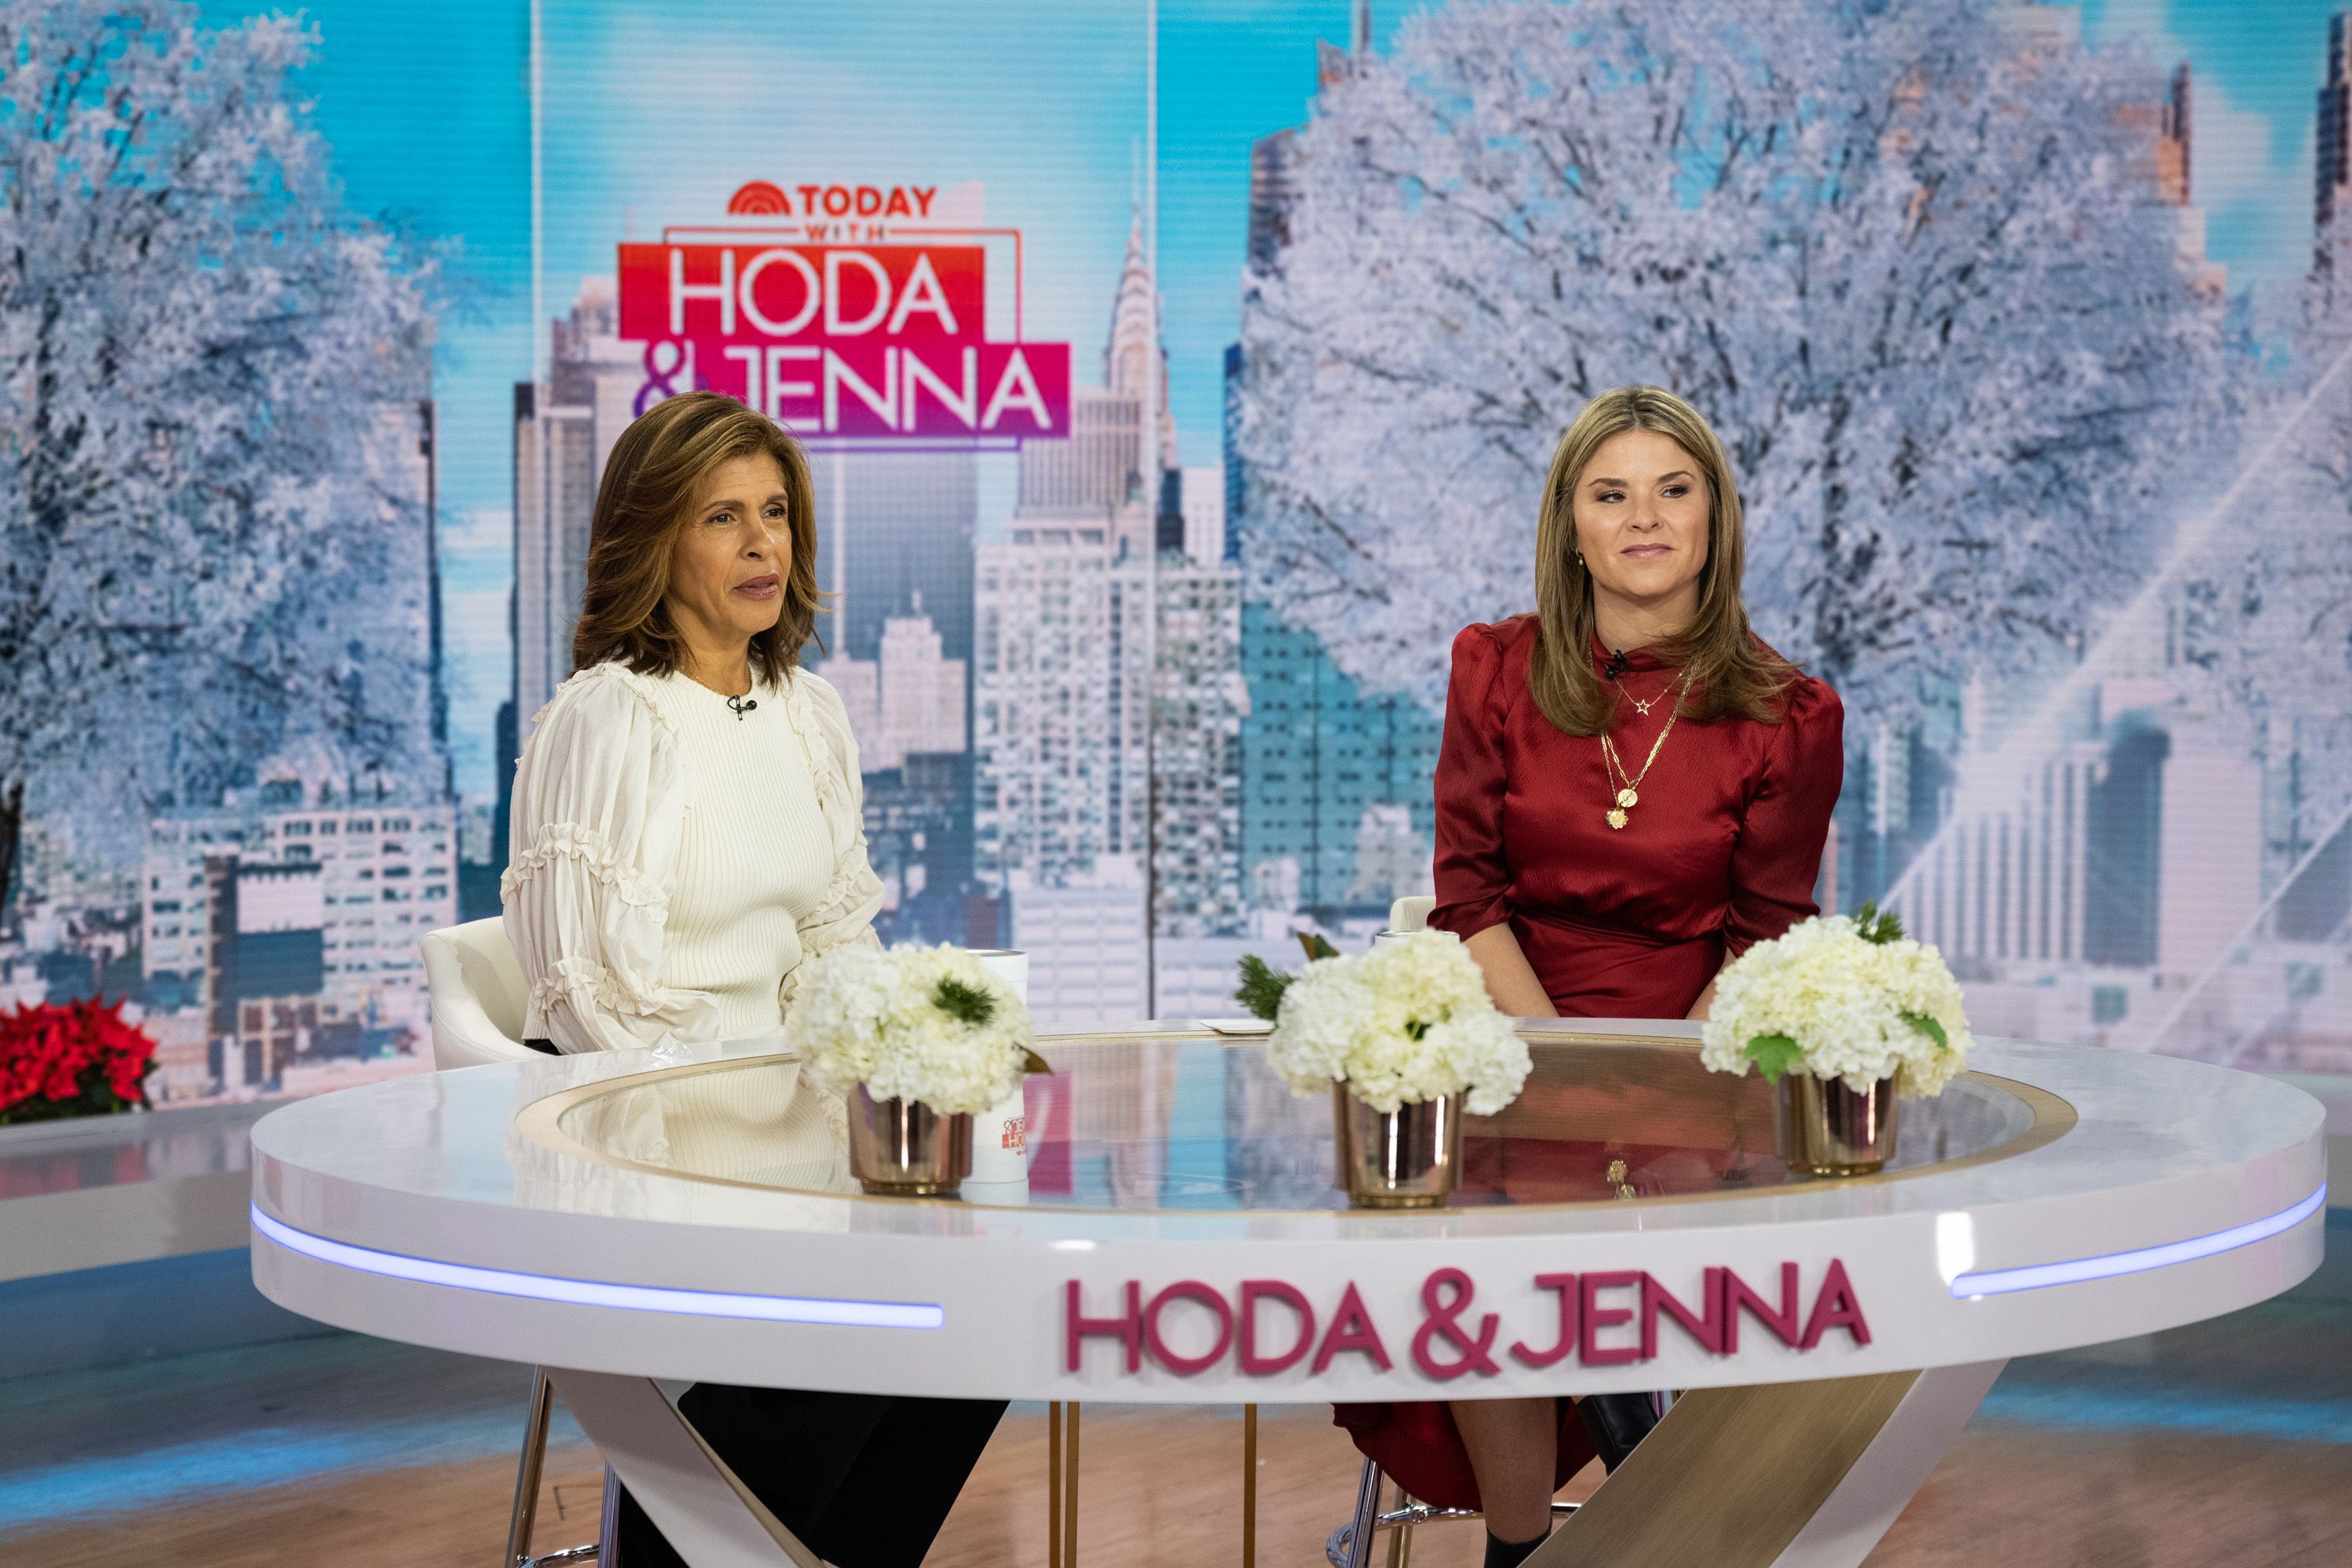 Hoda & Jenna: News, Photos & Videos from the show 